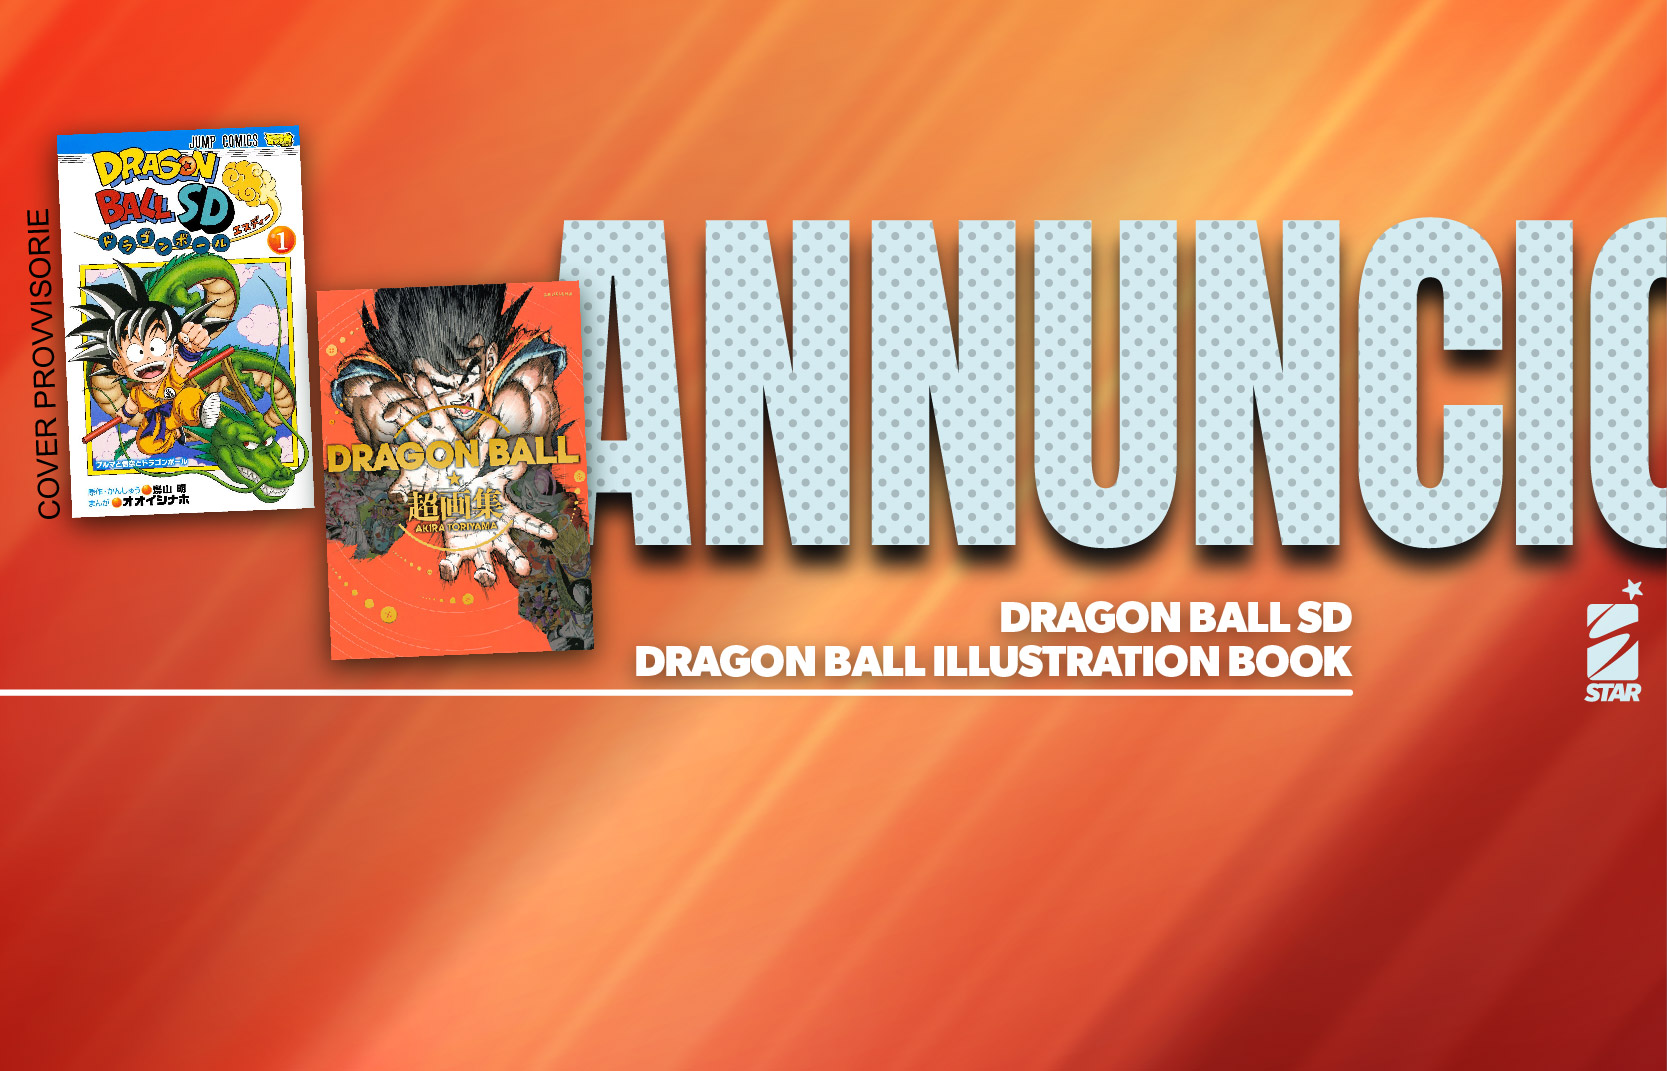 Annunci - Dragon Ball SD e Illustration Book_COVER.jpg